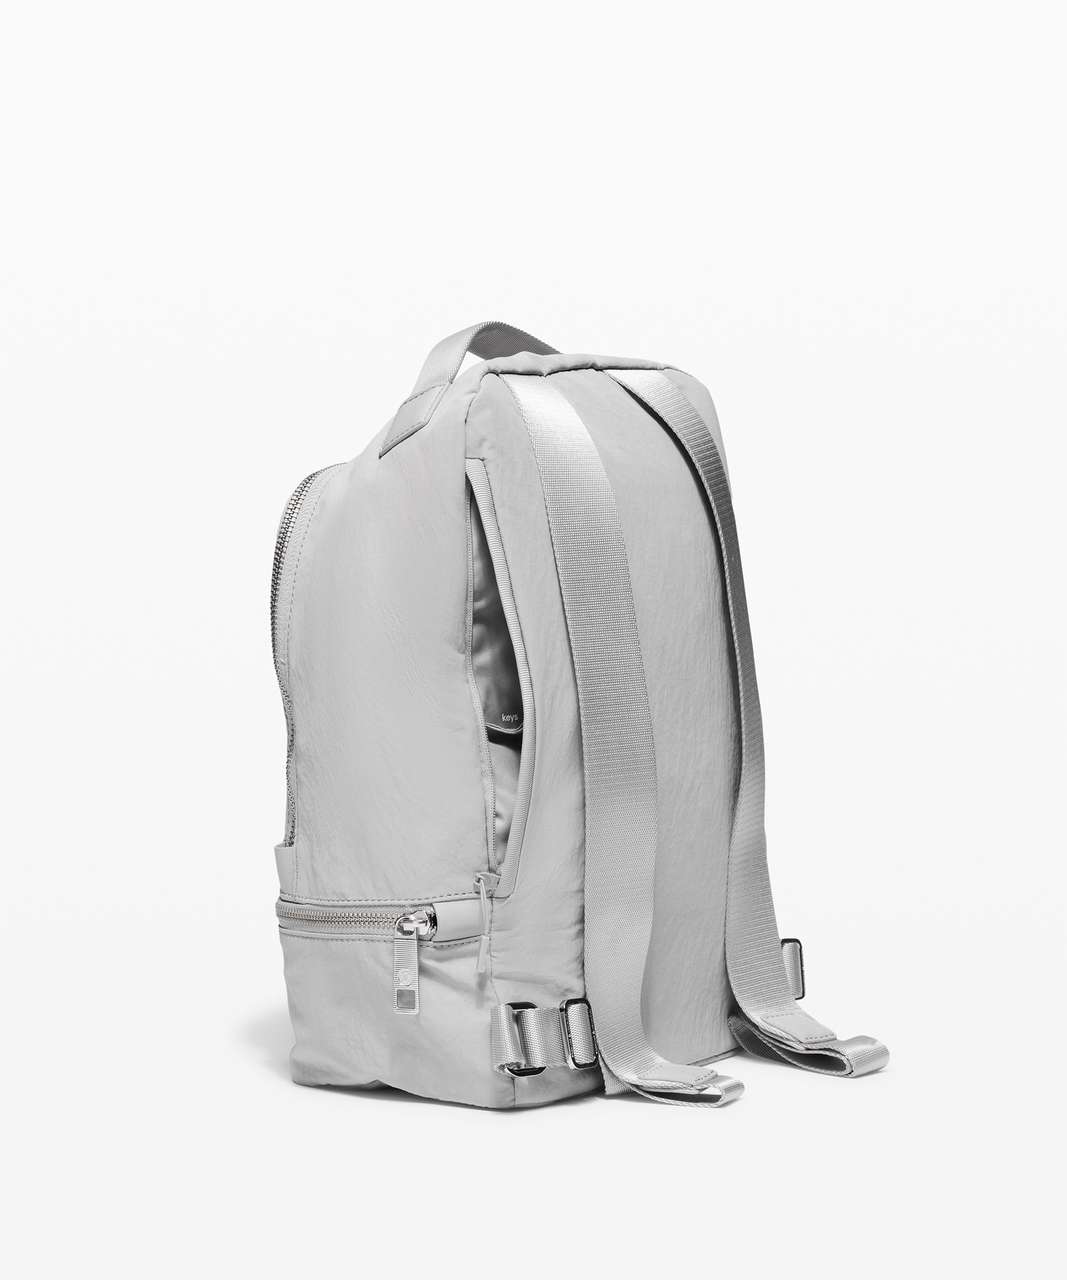 Review of artifact city adventurer mini backpack : r/lululemon